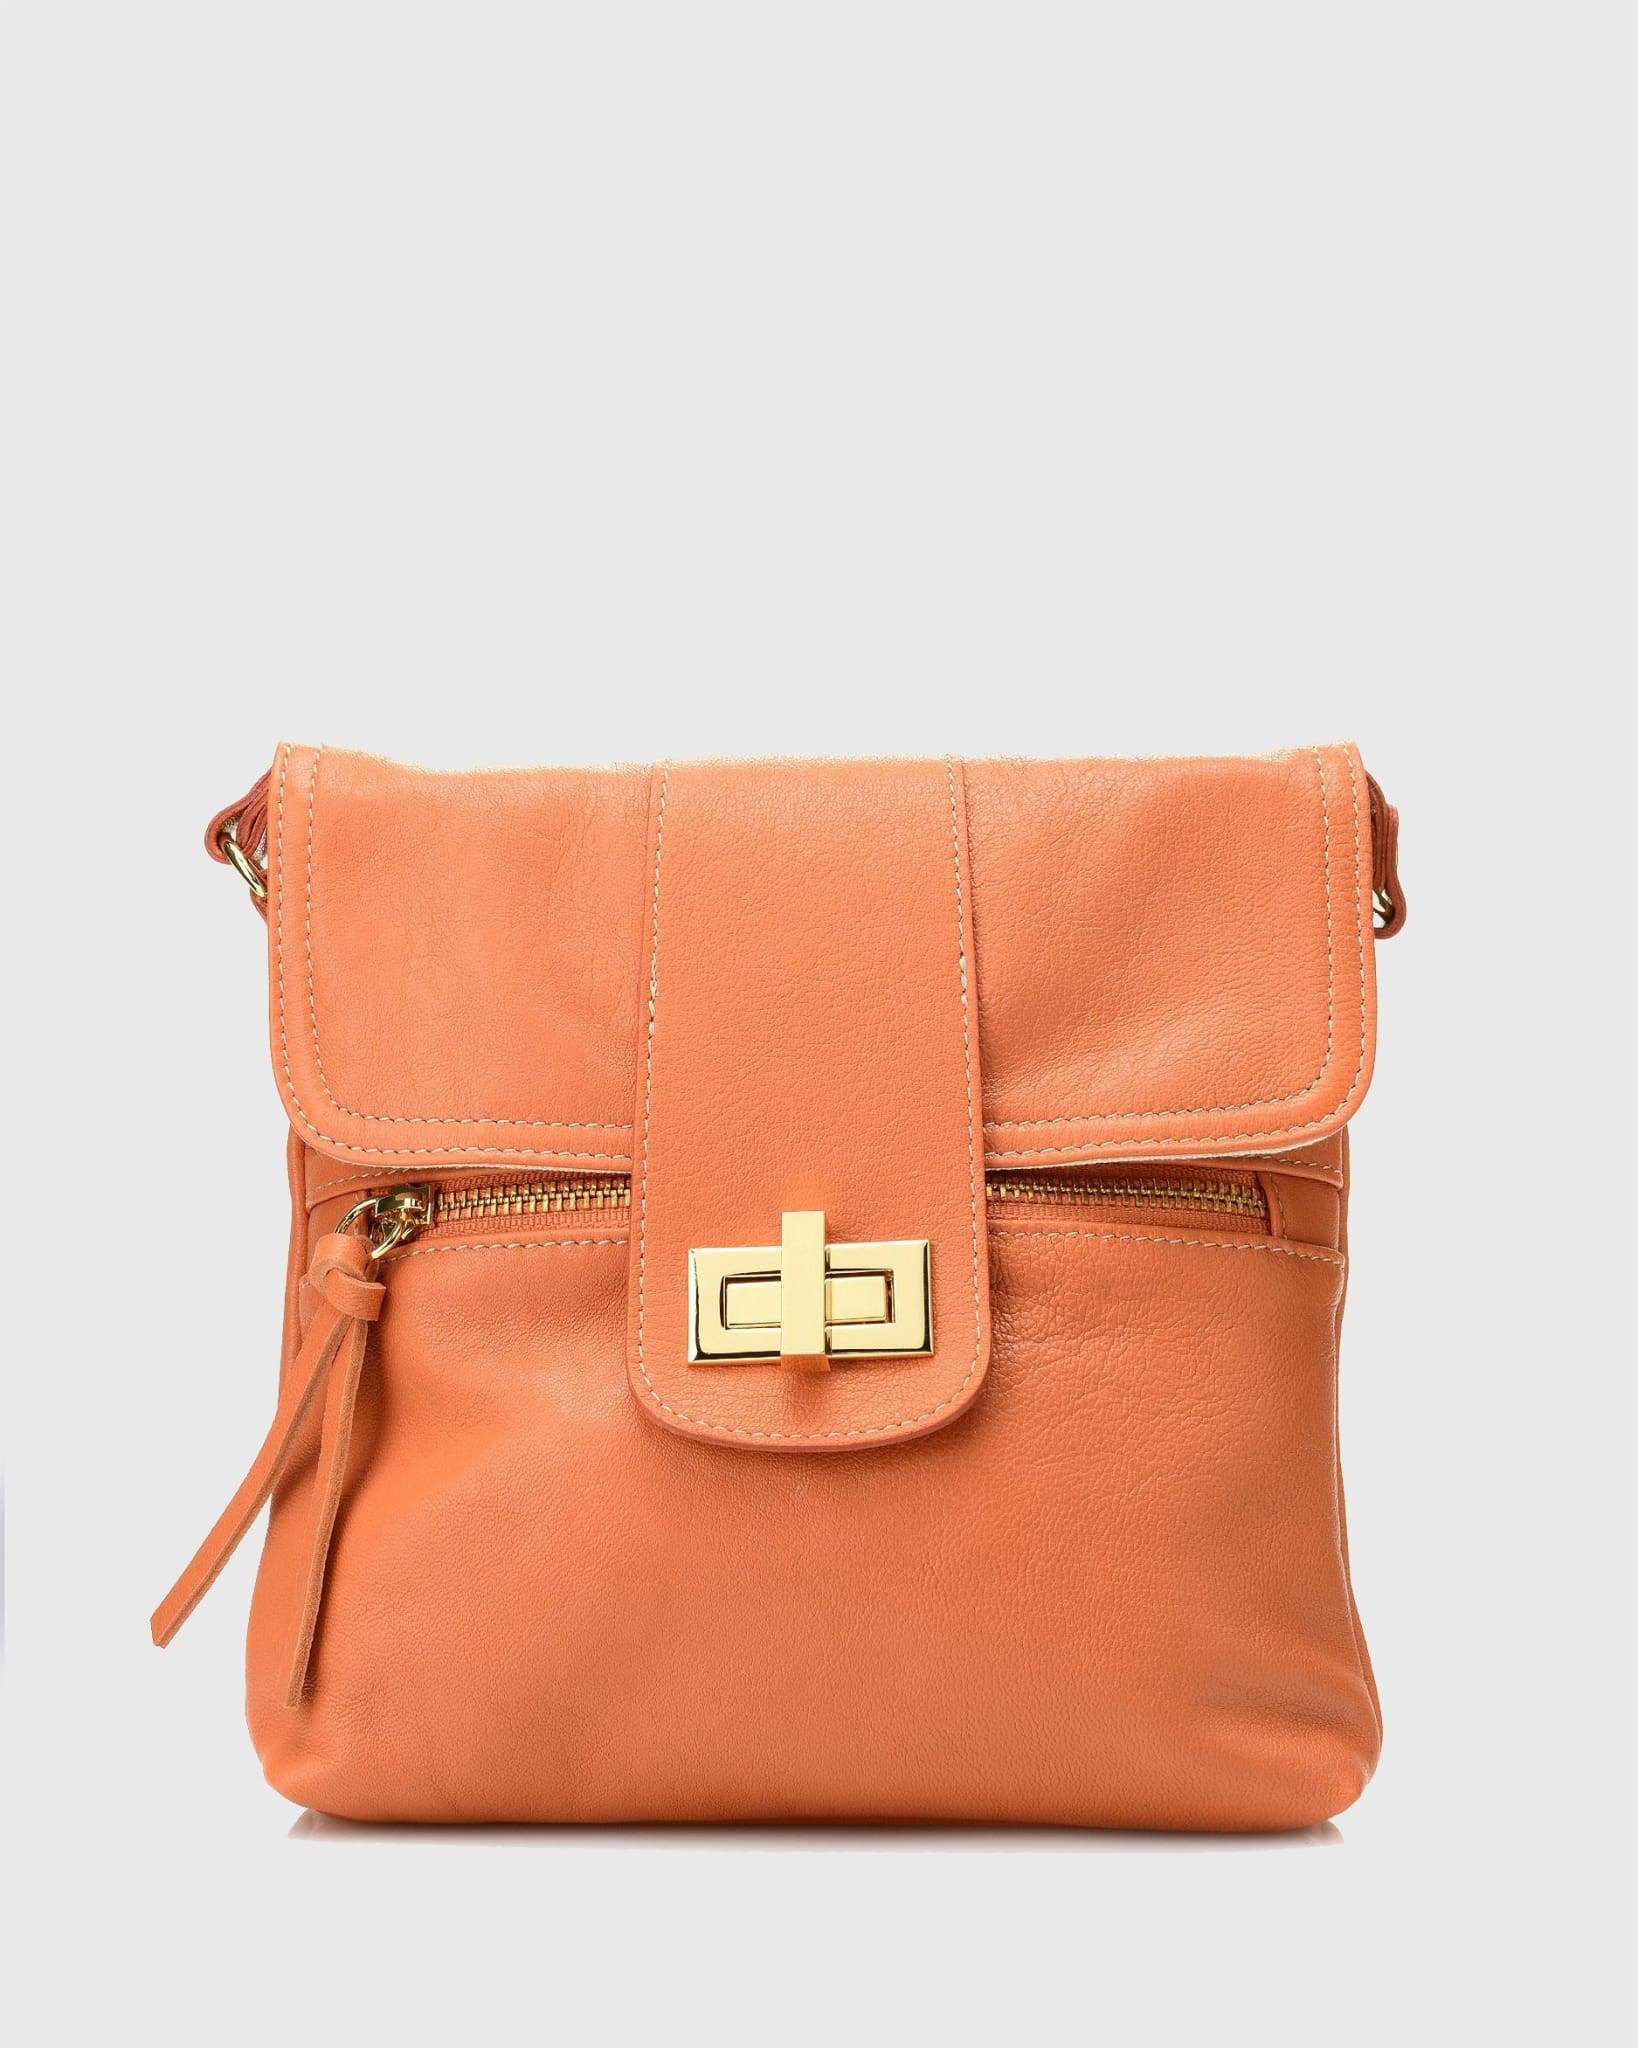 Juliet - Orange Bags | Pietro NYC